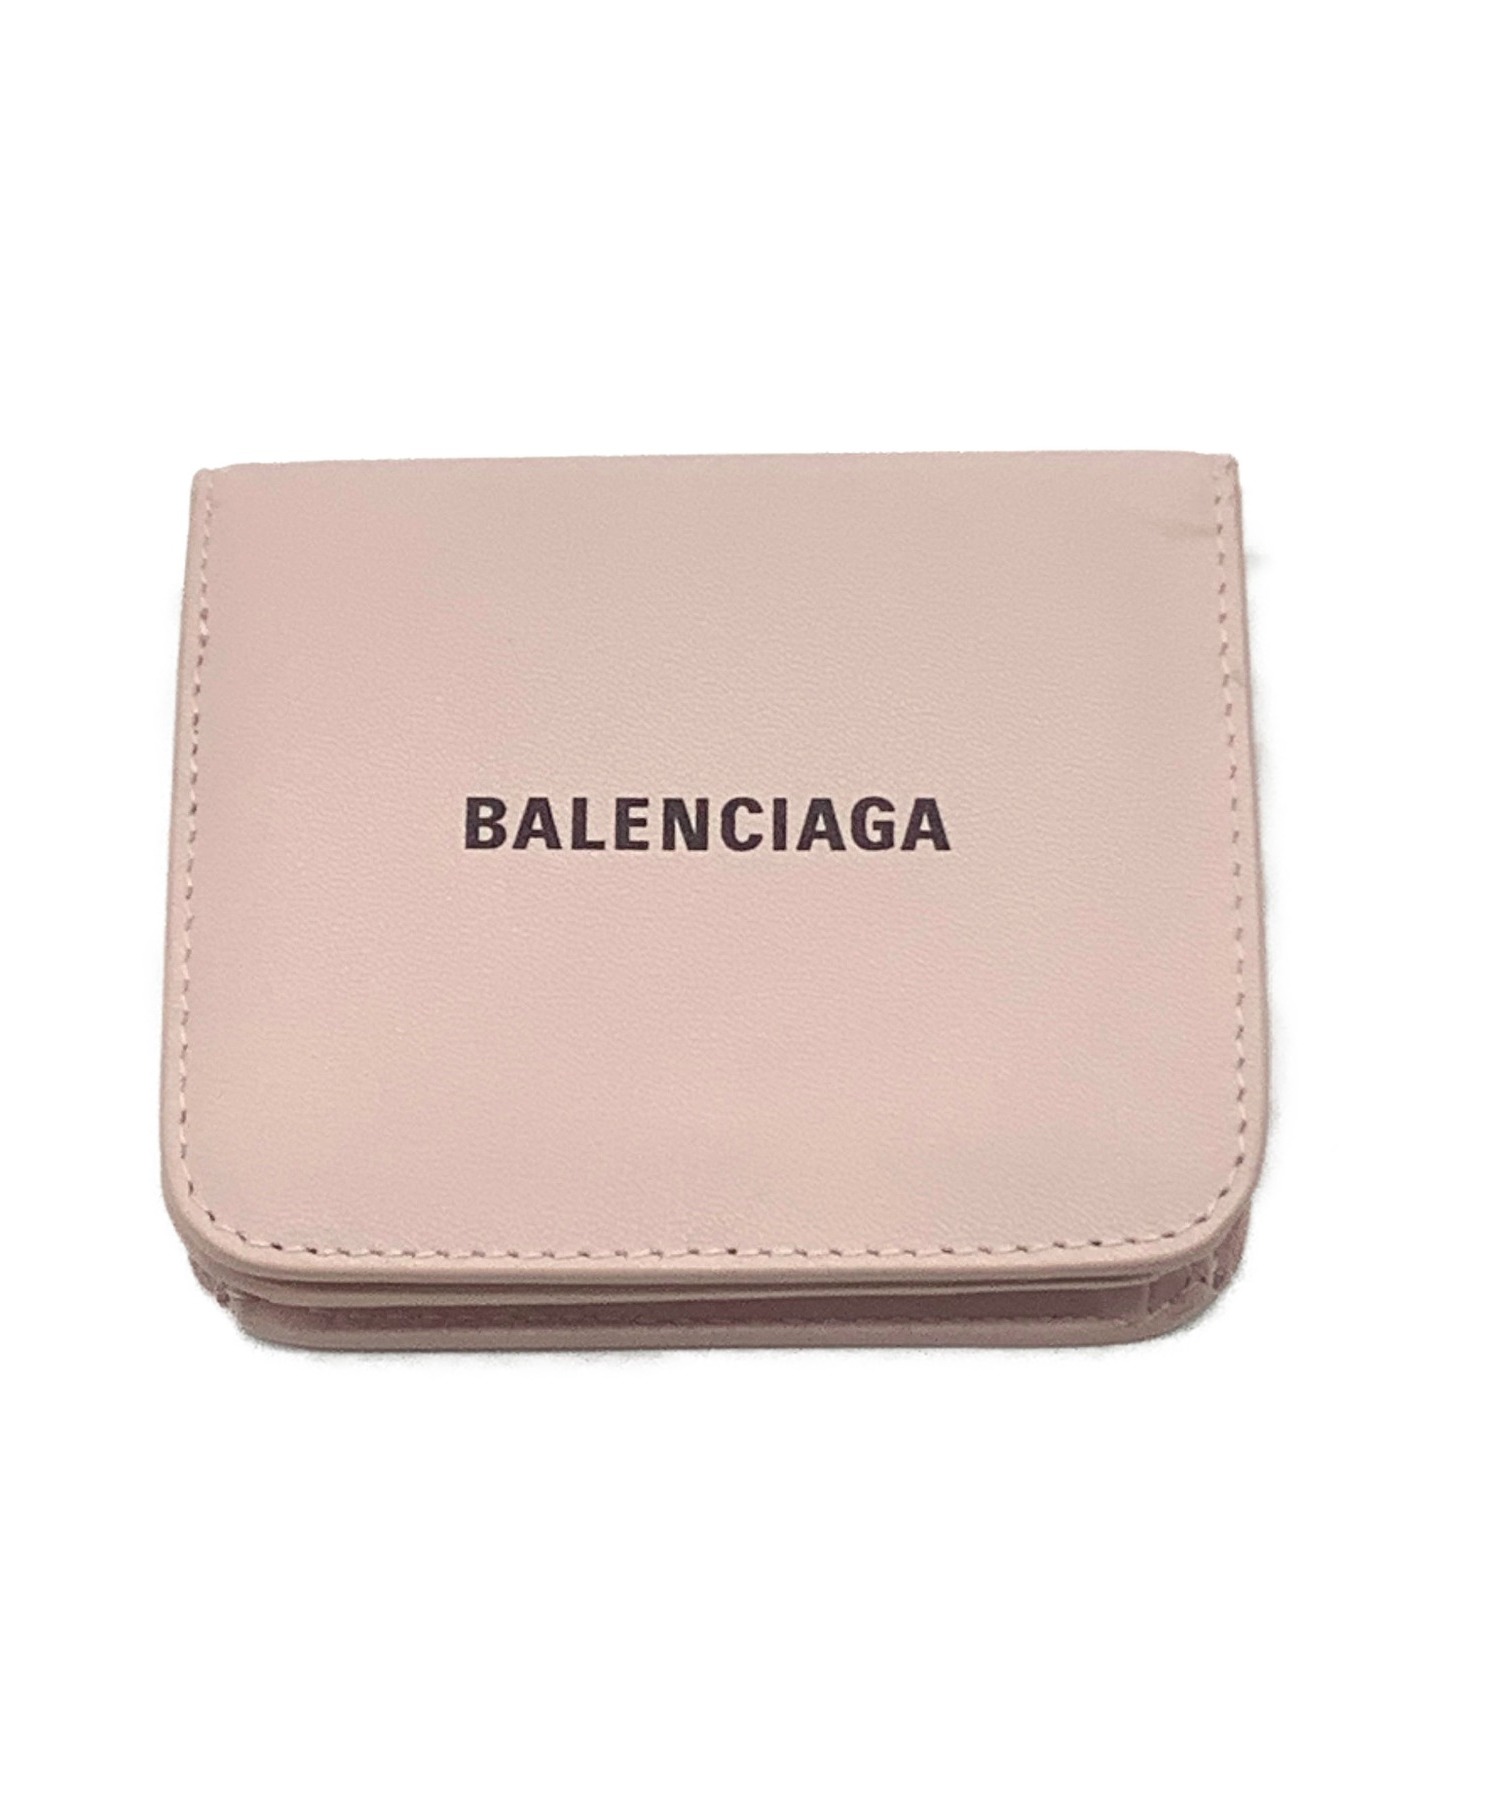 BALENCIAGA (バレンシアガ) 2つ折り財布 ピンク 594216